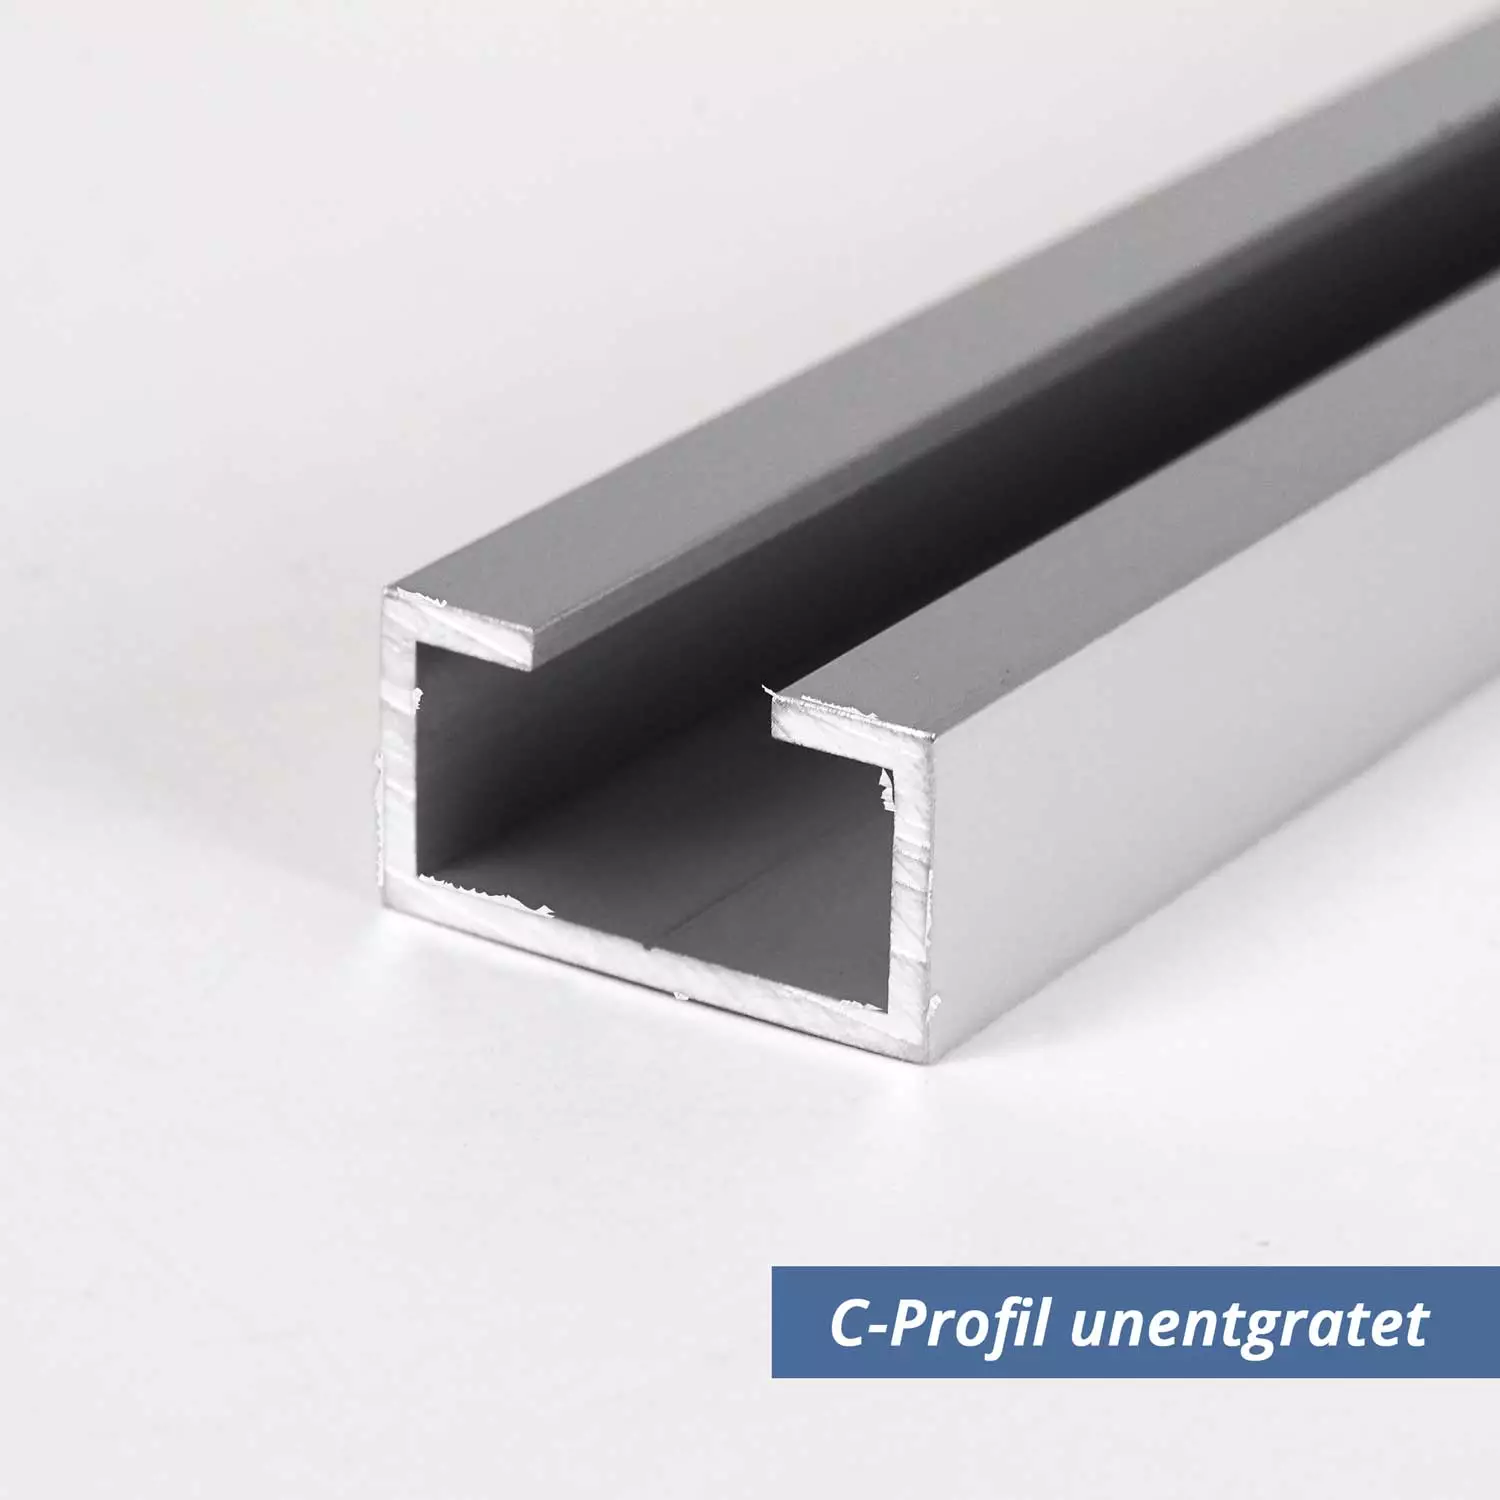 C-Profil aus Aluminium 15x28x8 mm in 2 mm Stärke